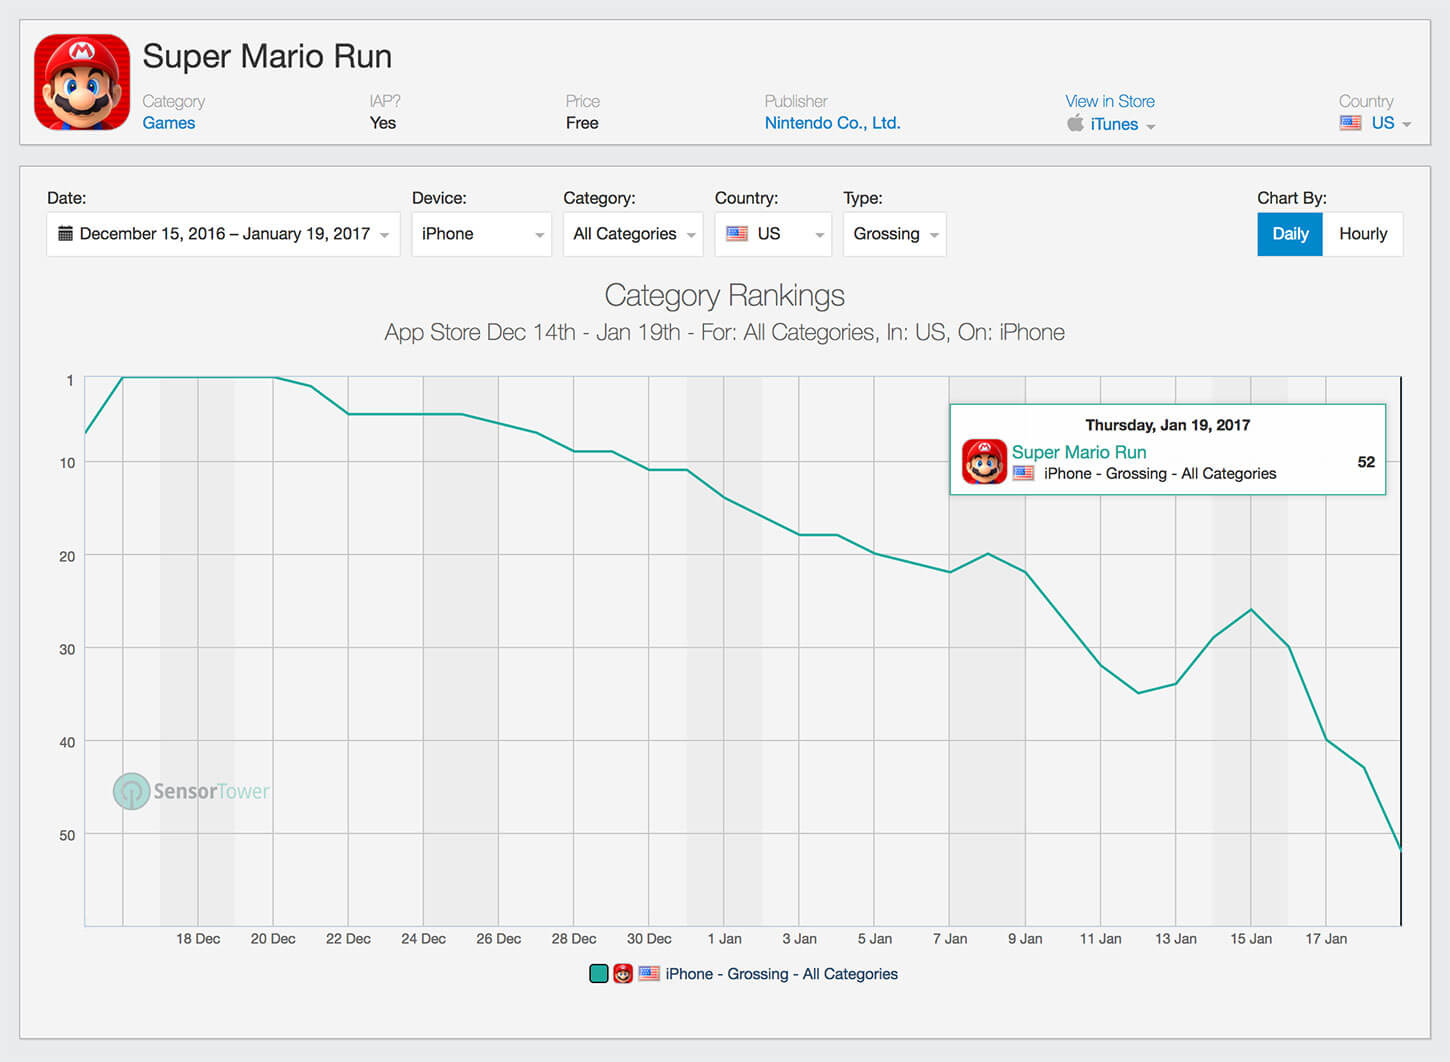 Super Mario Run's ranking in the iTunes' U.S. top grossing apps list.